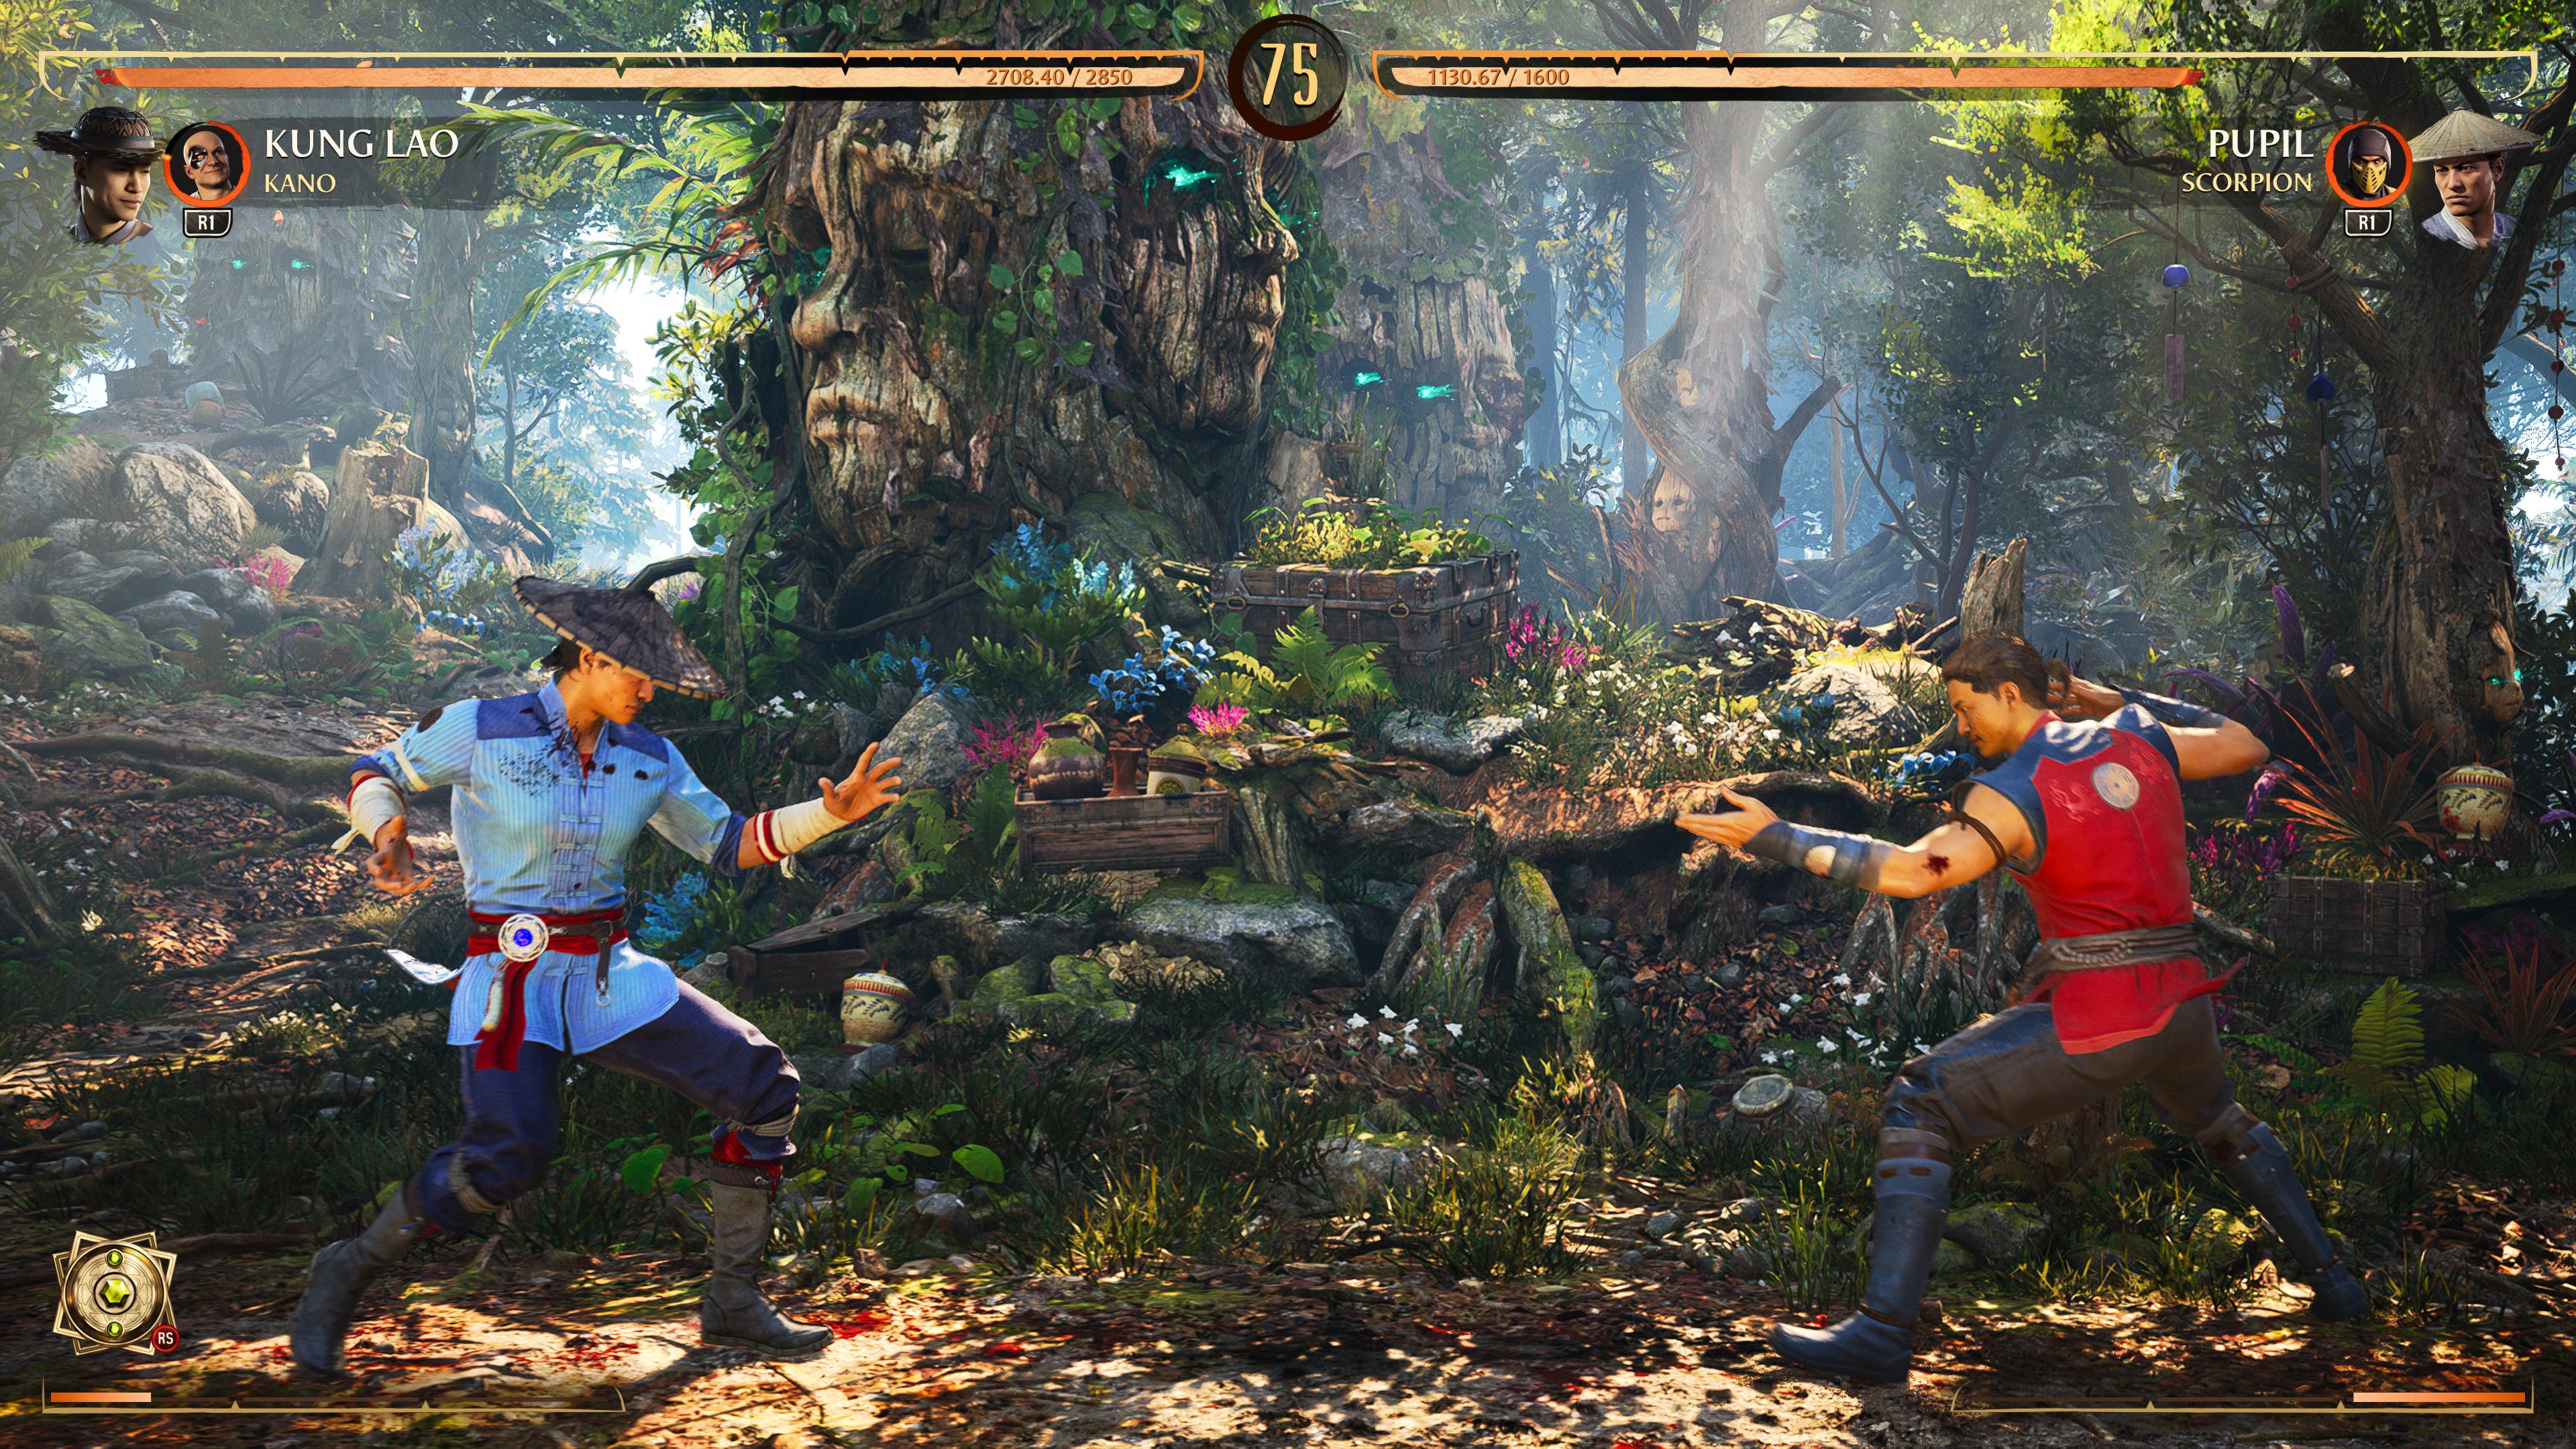 Mortal Kombat 1 Launch Trailer Features Shang Tsung, Reiko, And